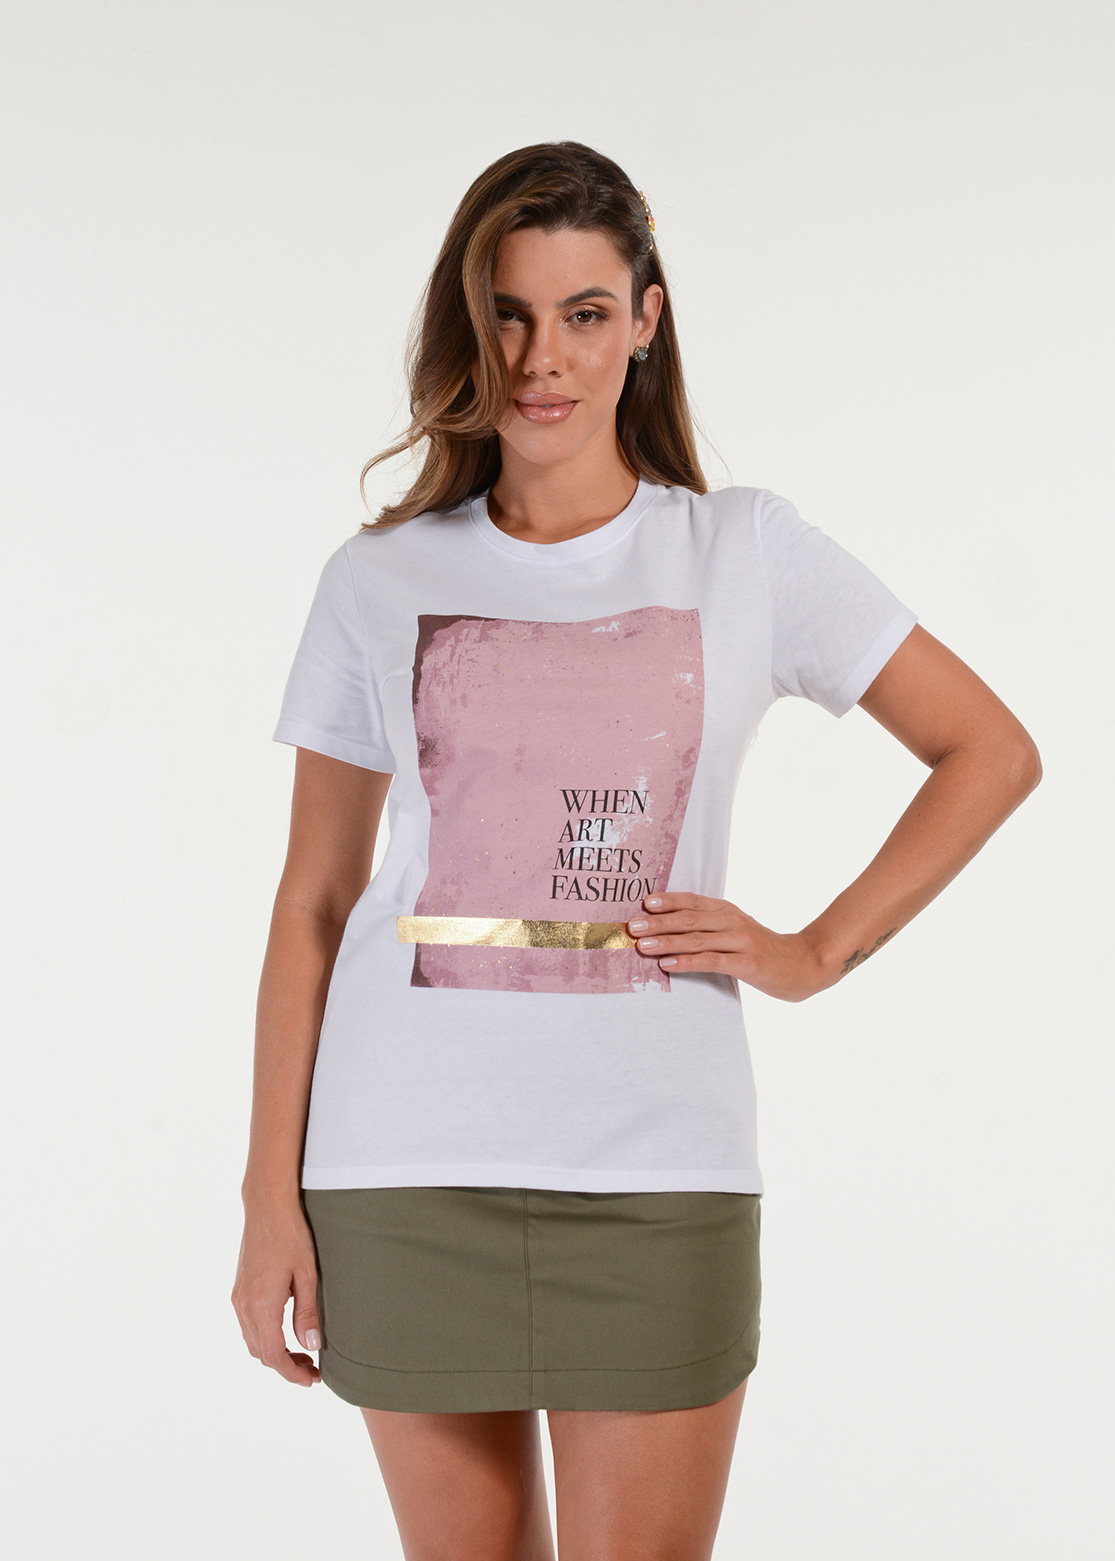 Brazzer Seal Pack Full Hd Office - Camiseta Art Fashion - Billie Combina Com VocÃª!